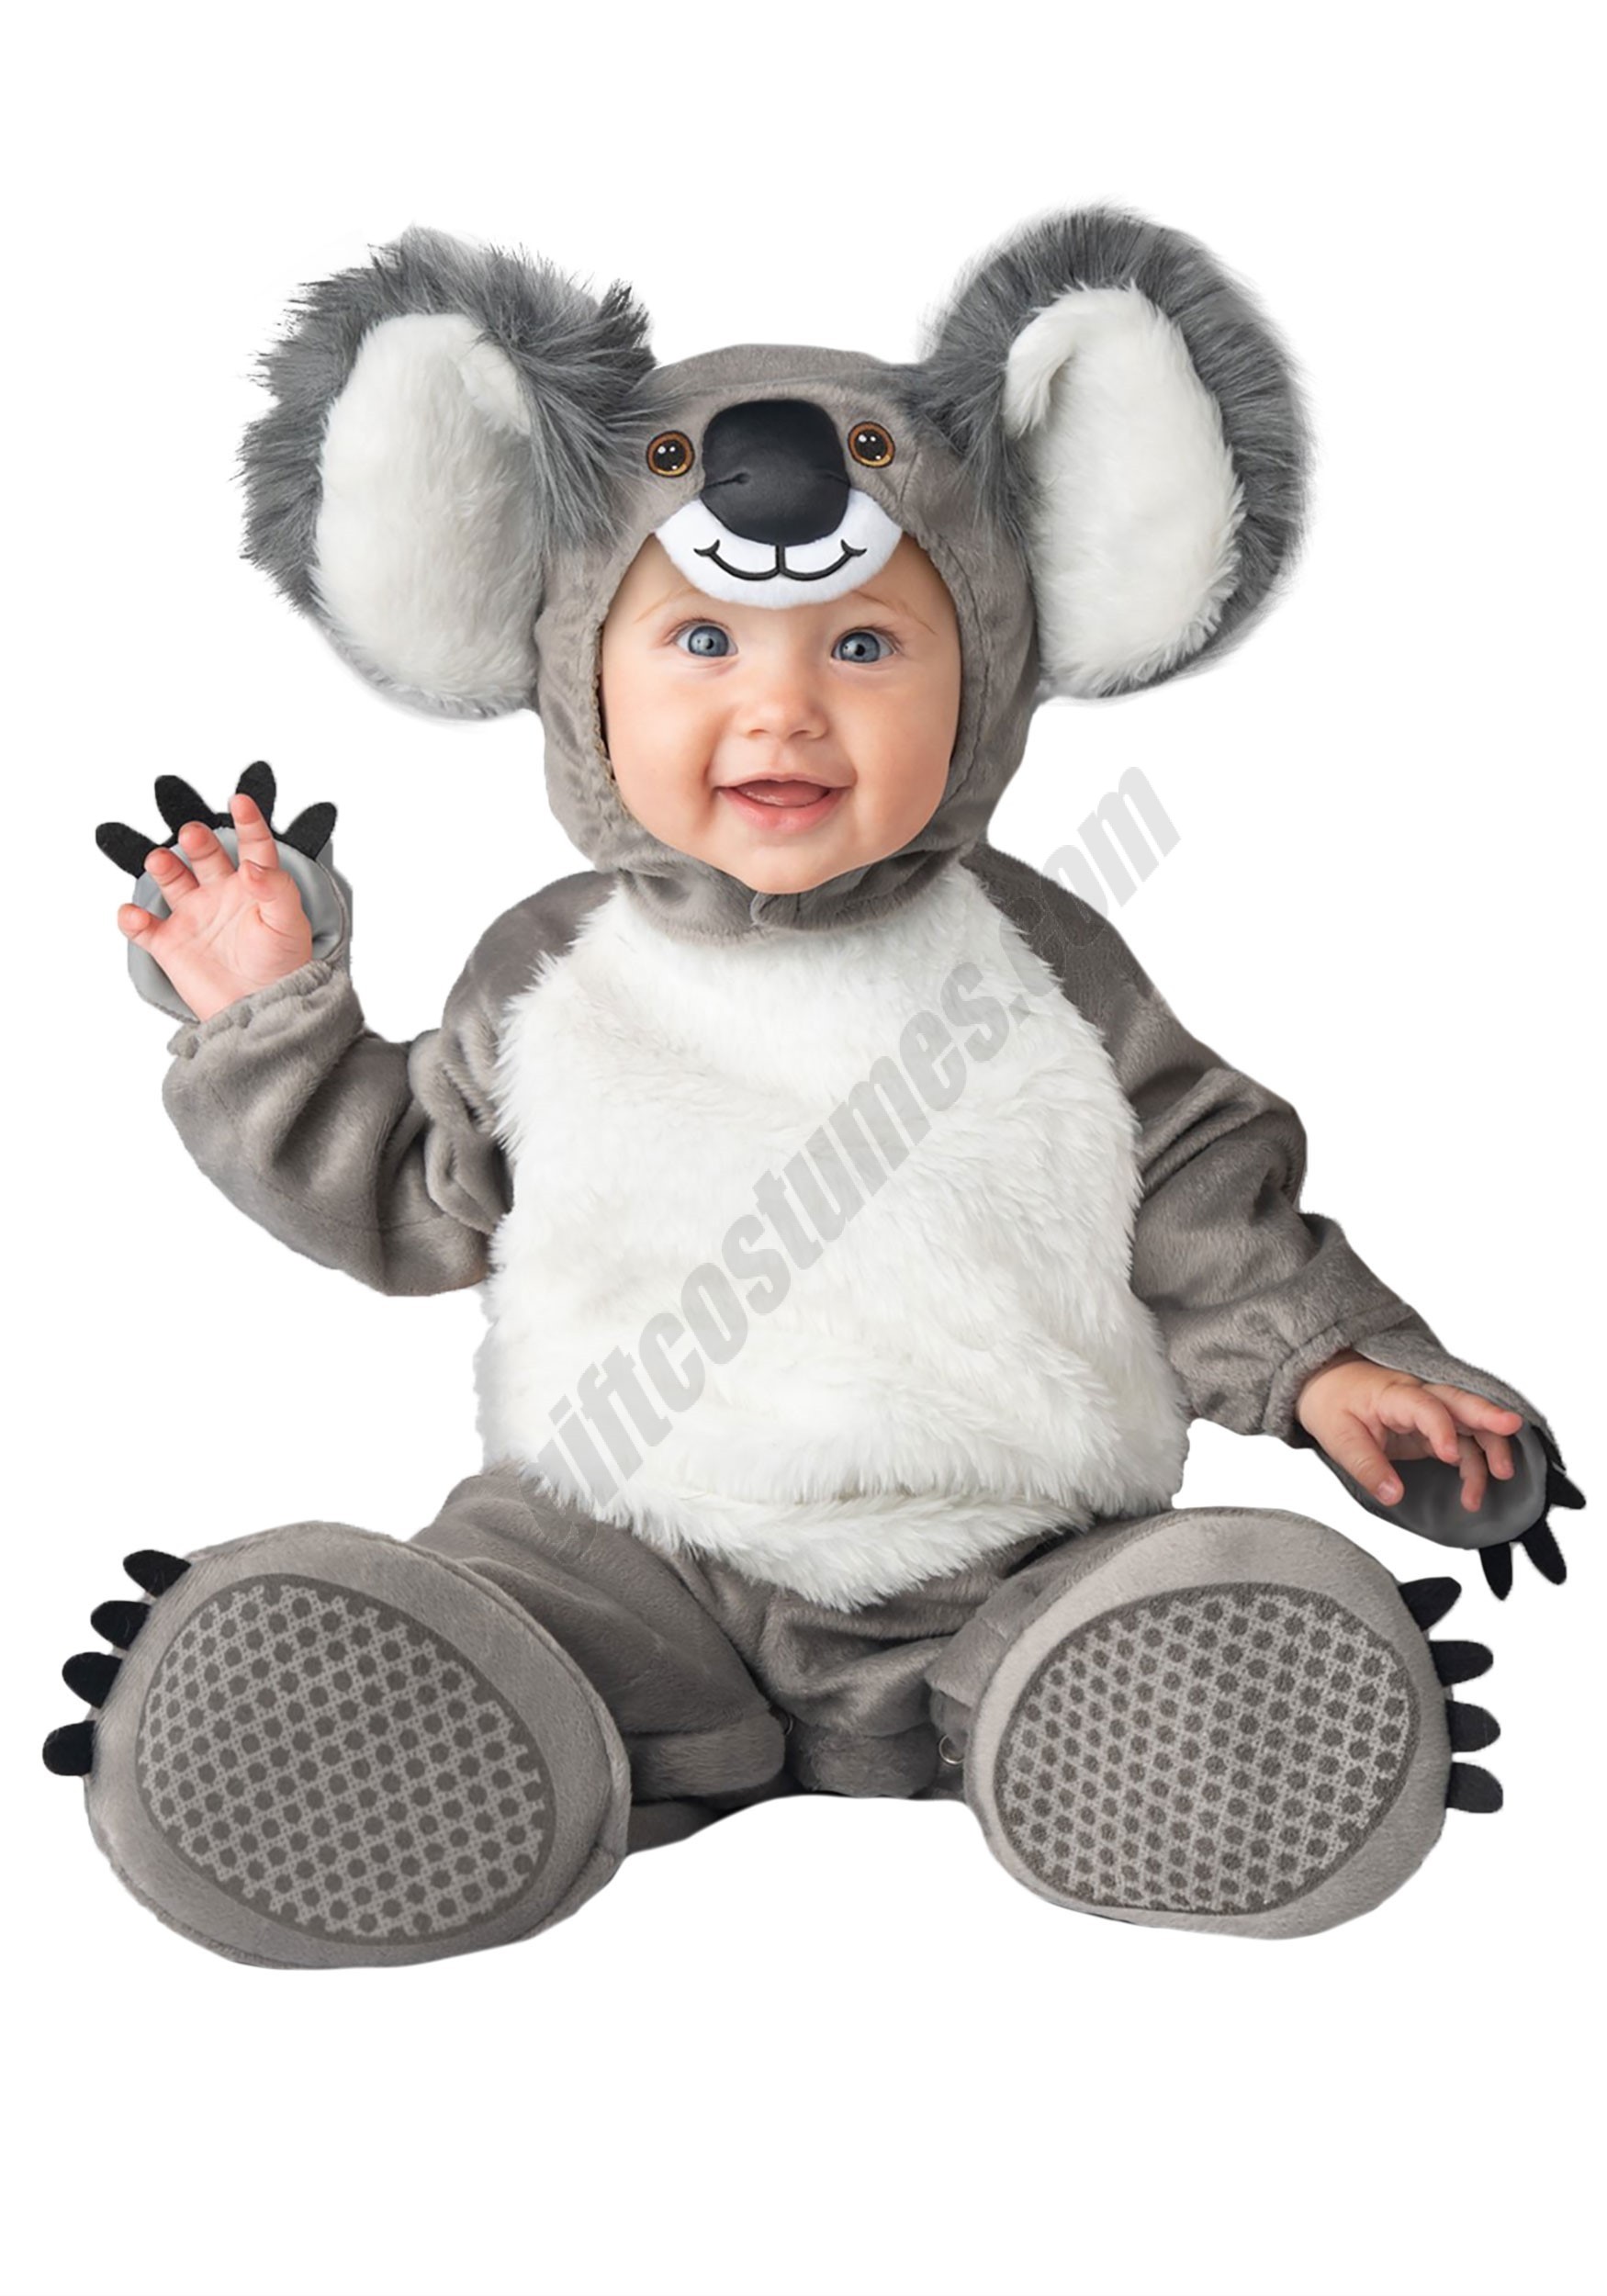 Infant Koala Kutie Costume Promotions - Infant Koala Kutie Costume Promotions